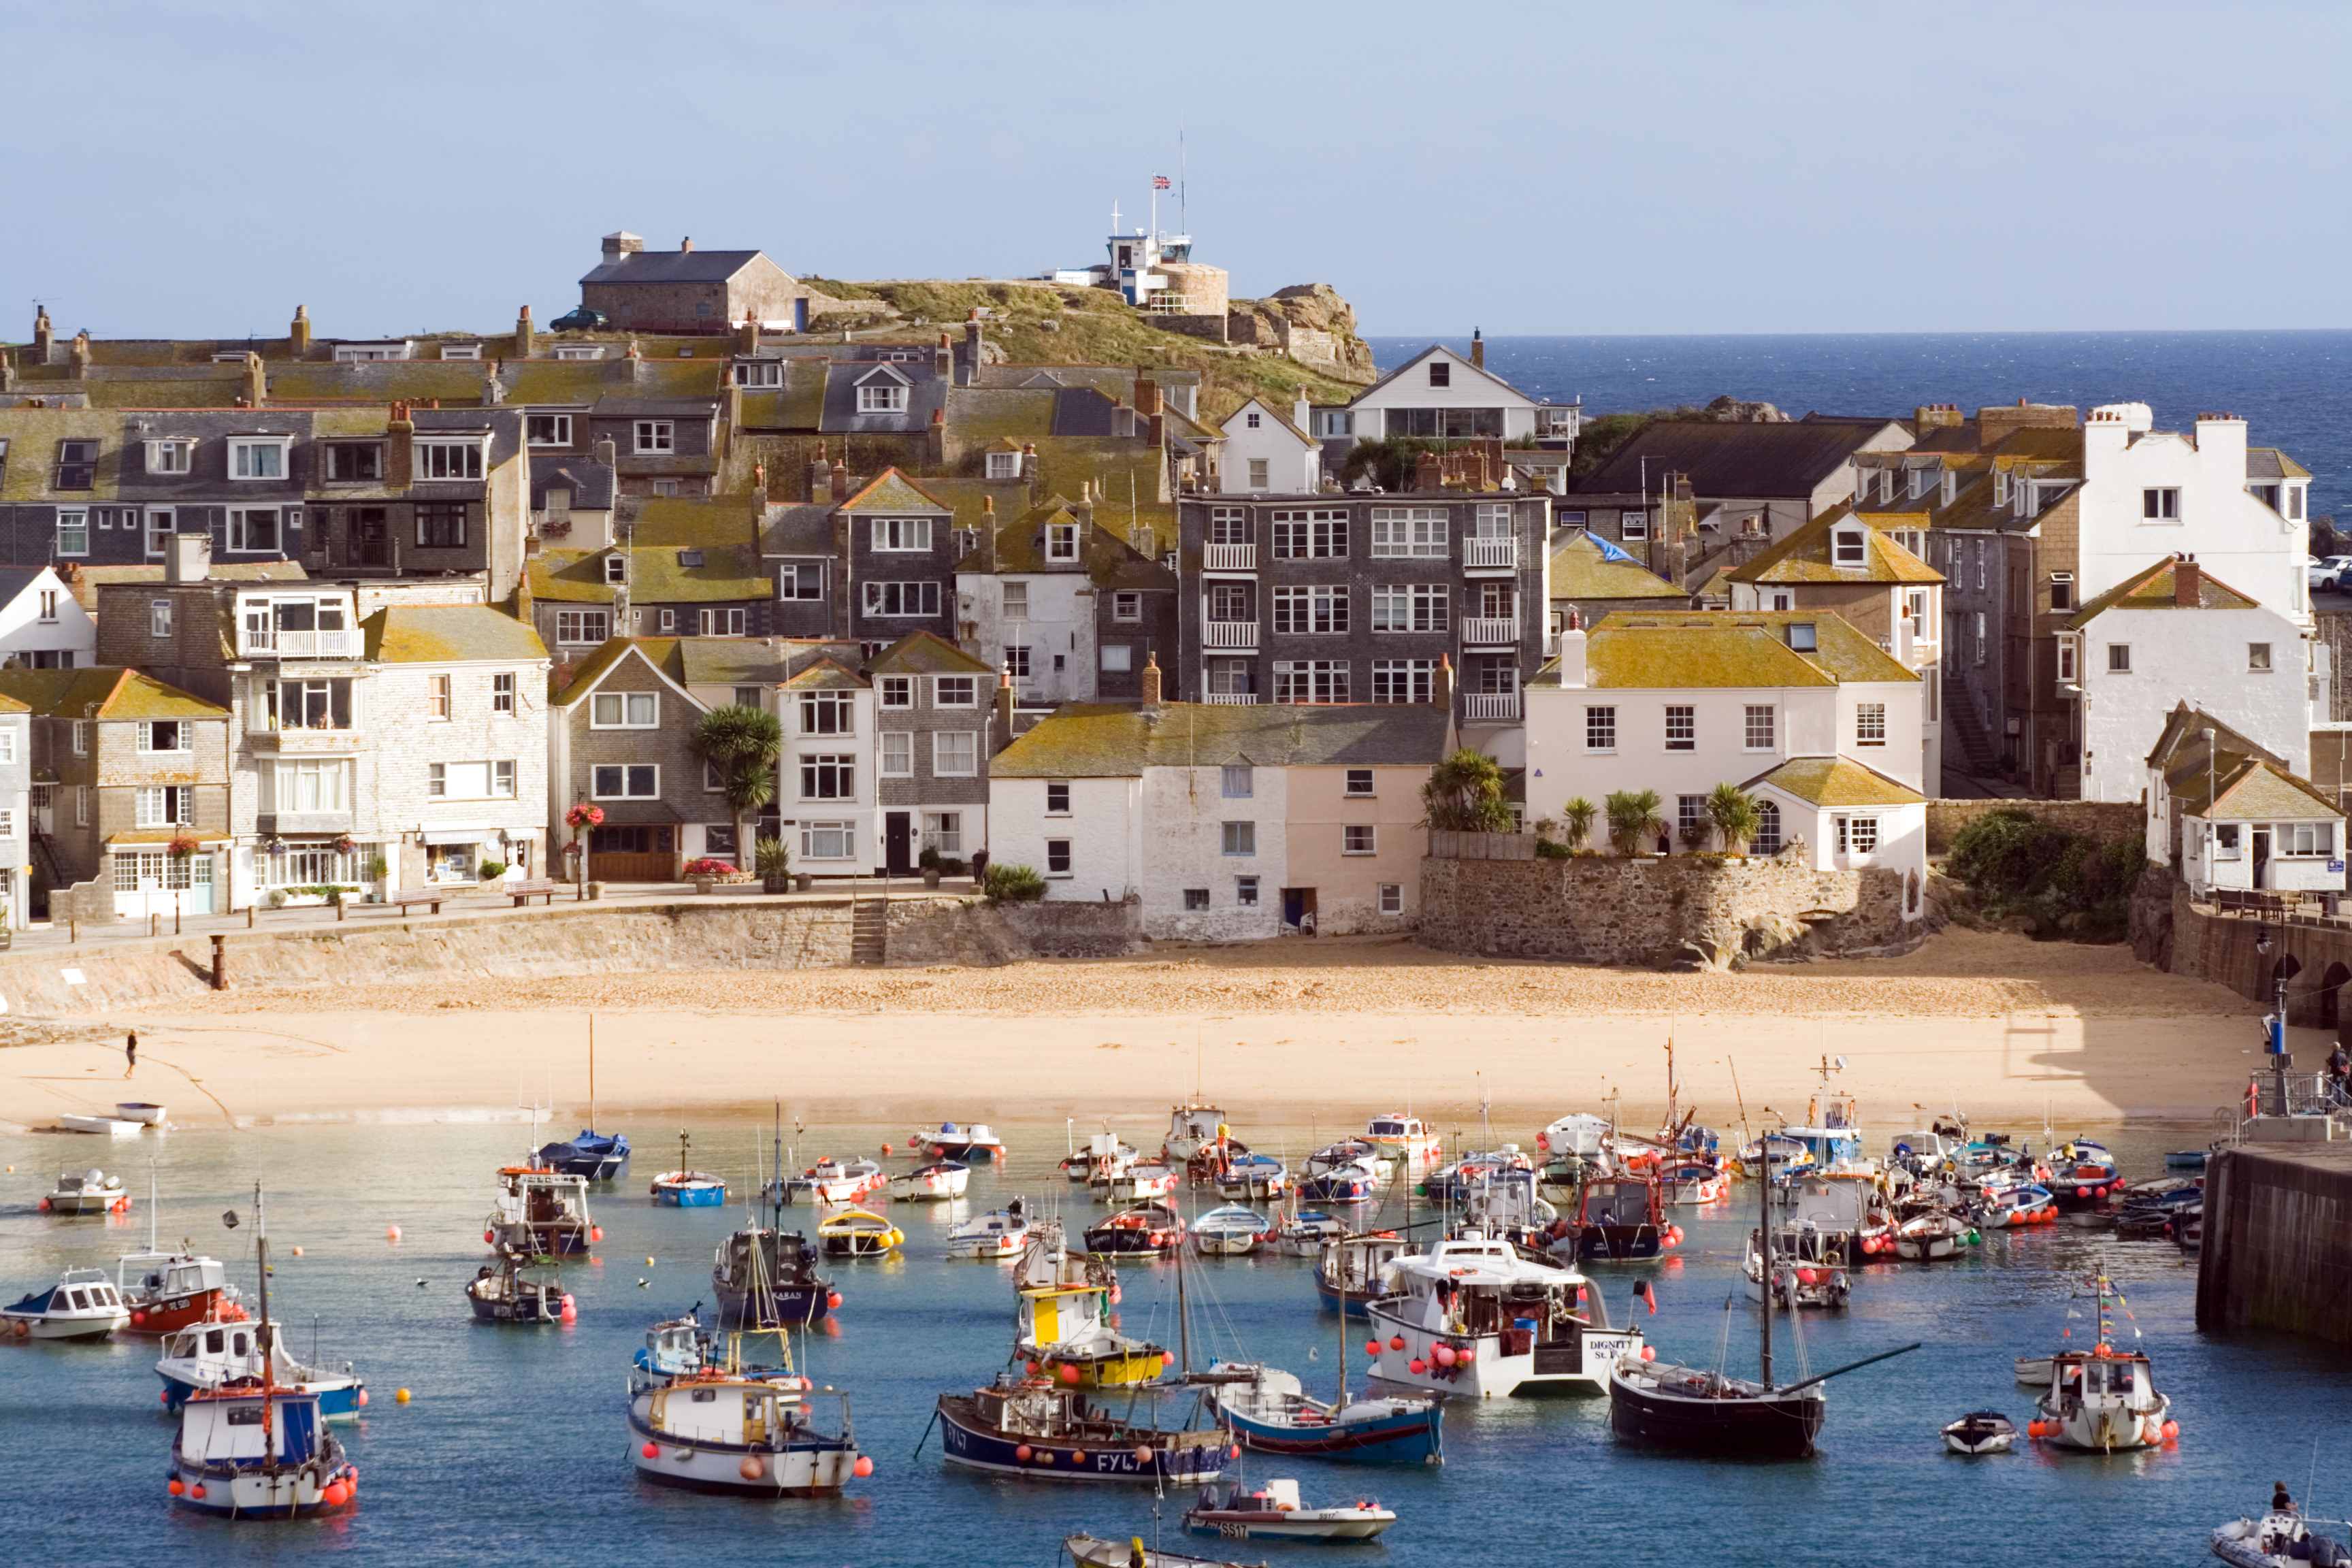 A Cornish fishing village